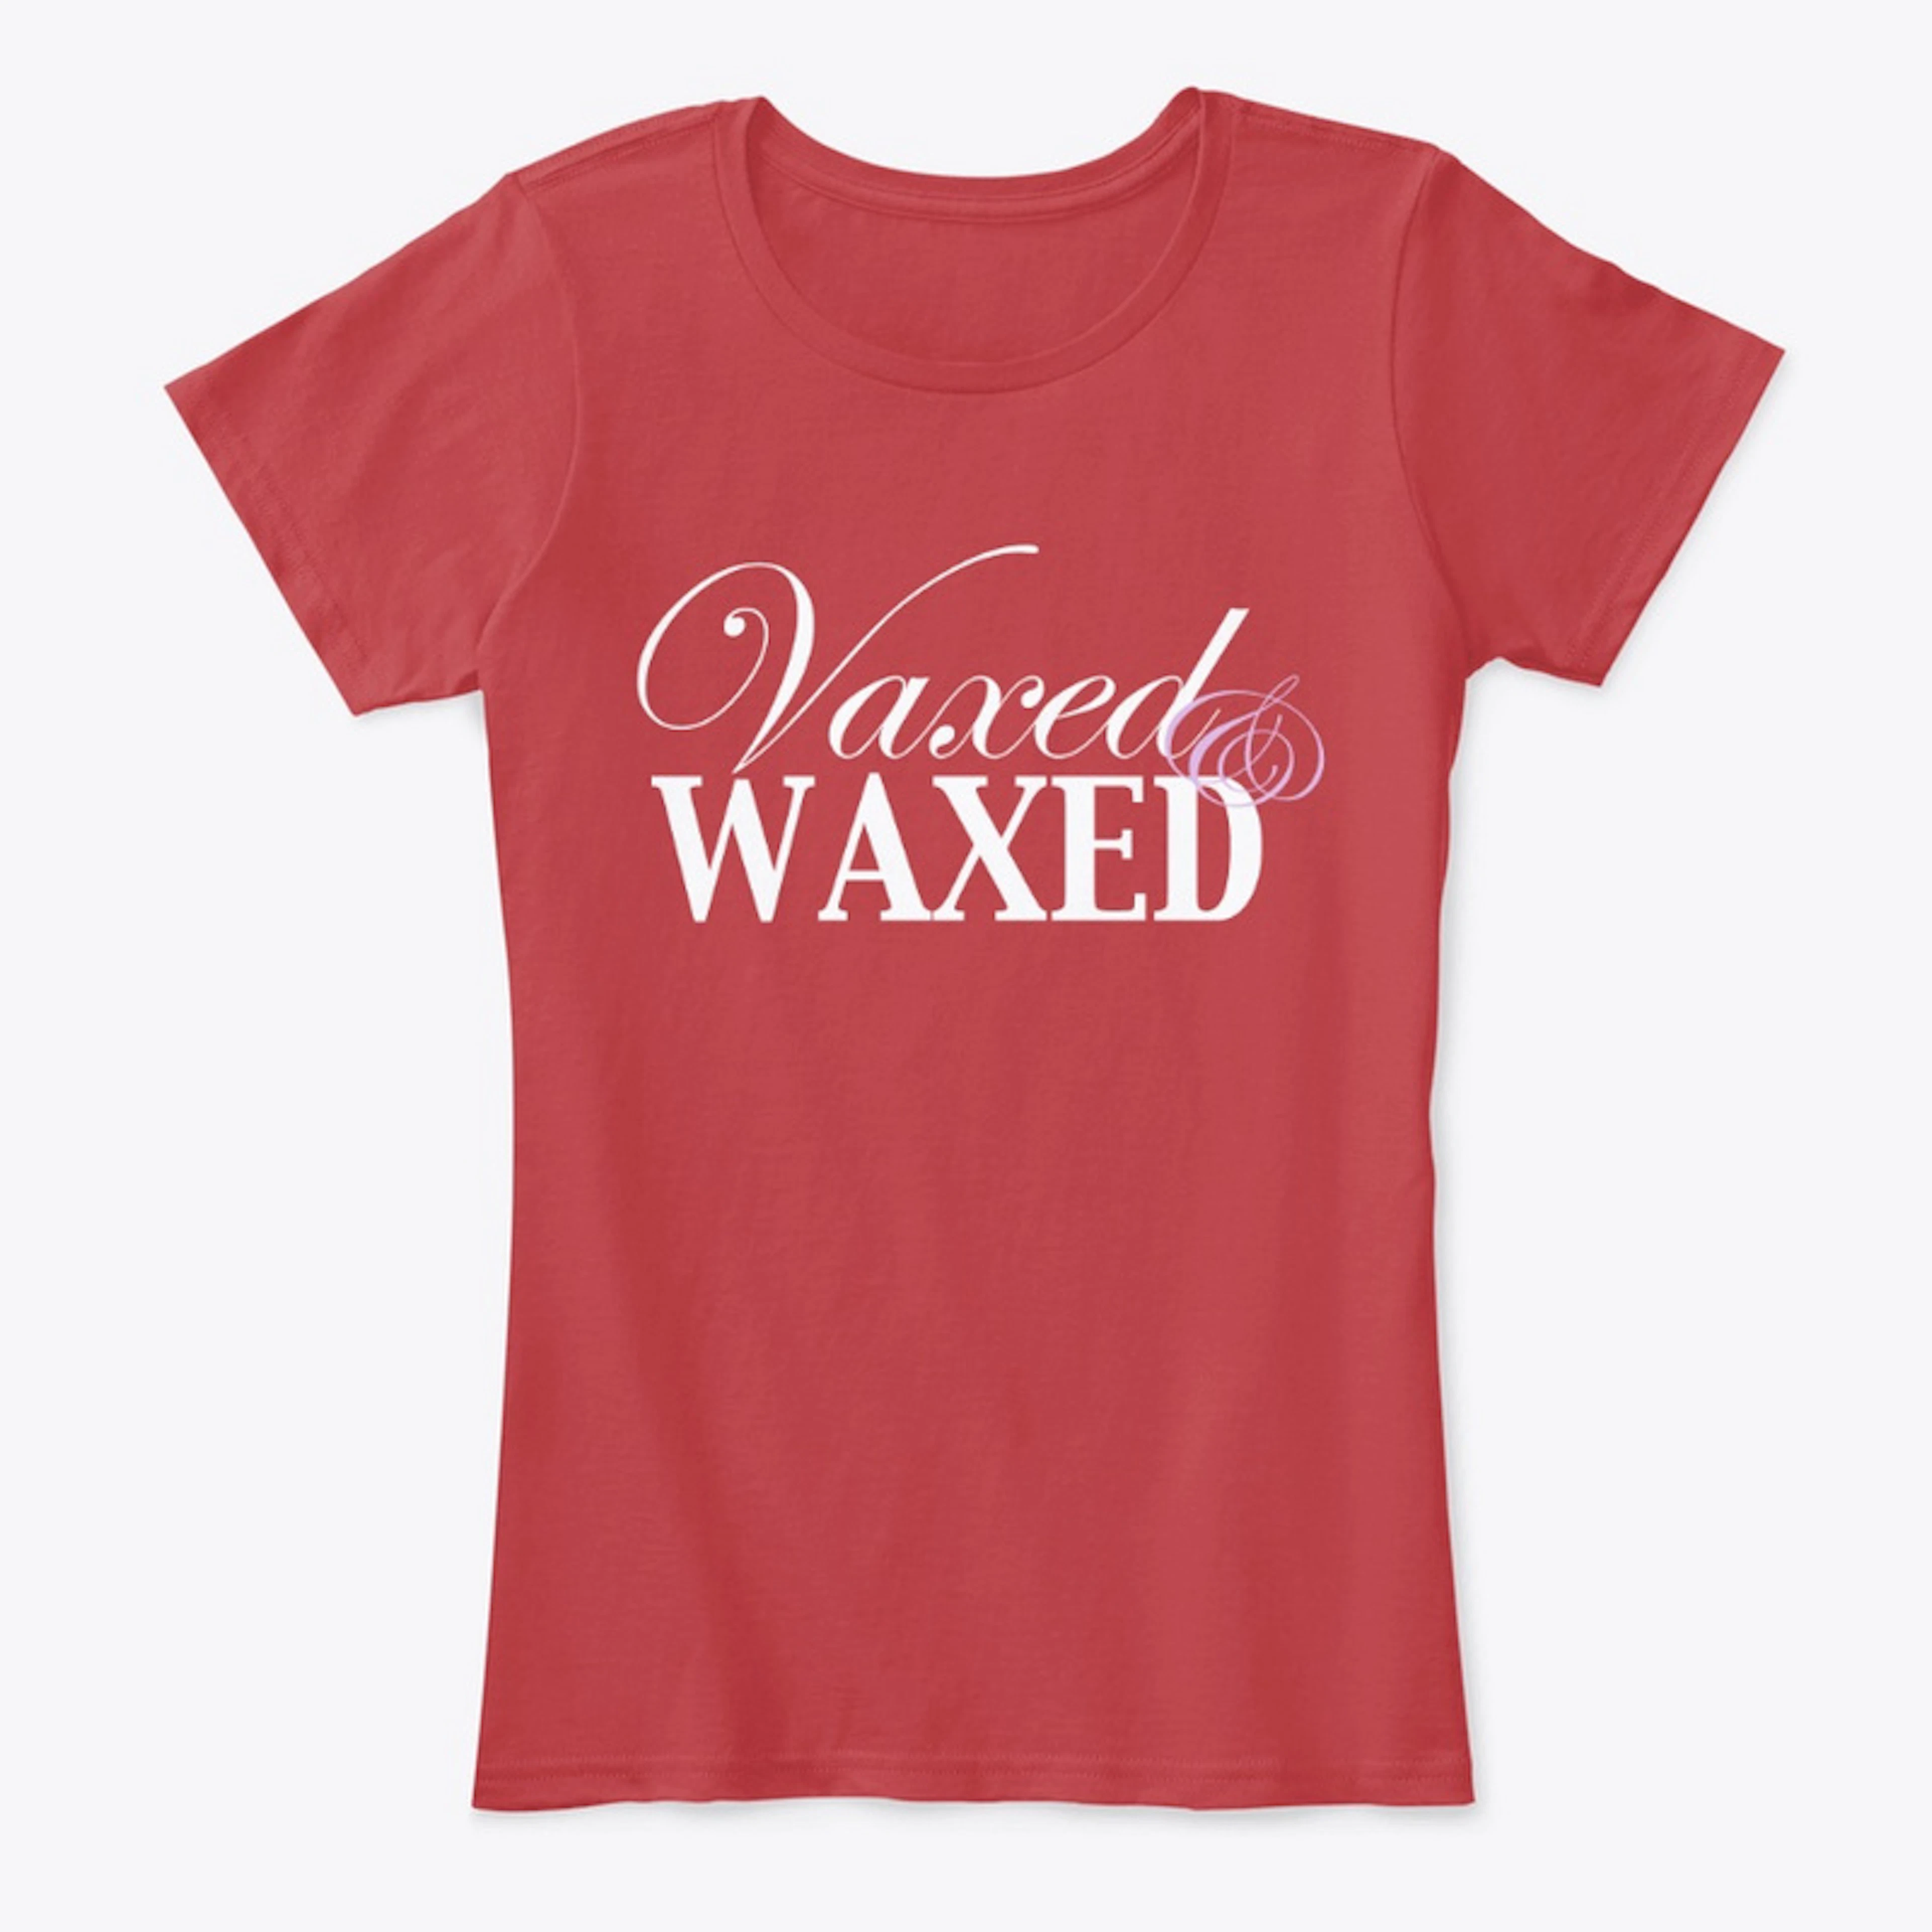 Vaxed and Waxed